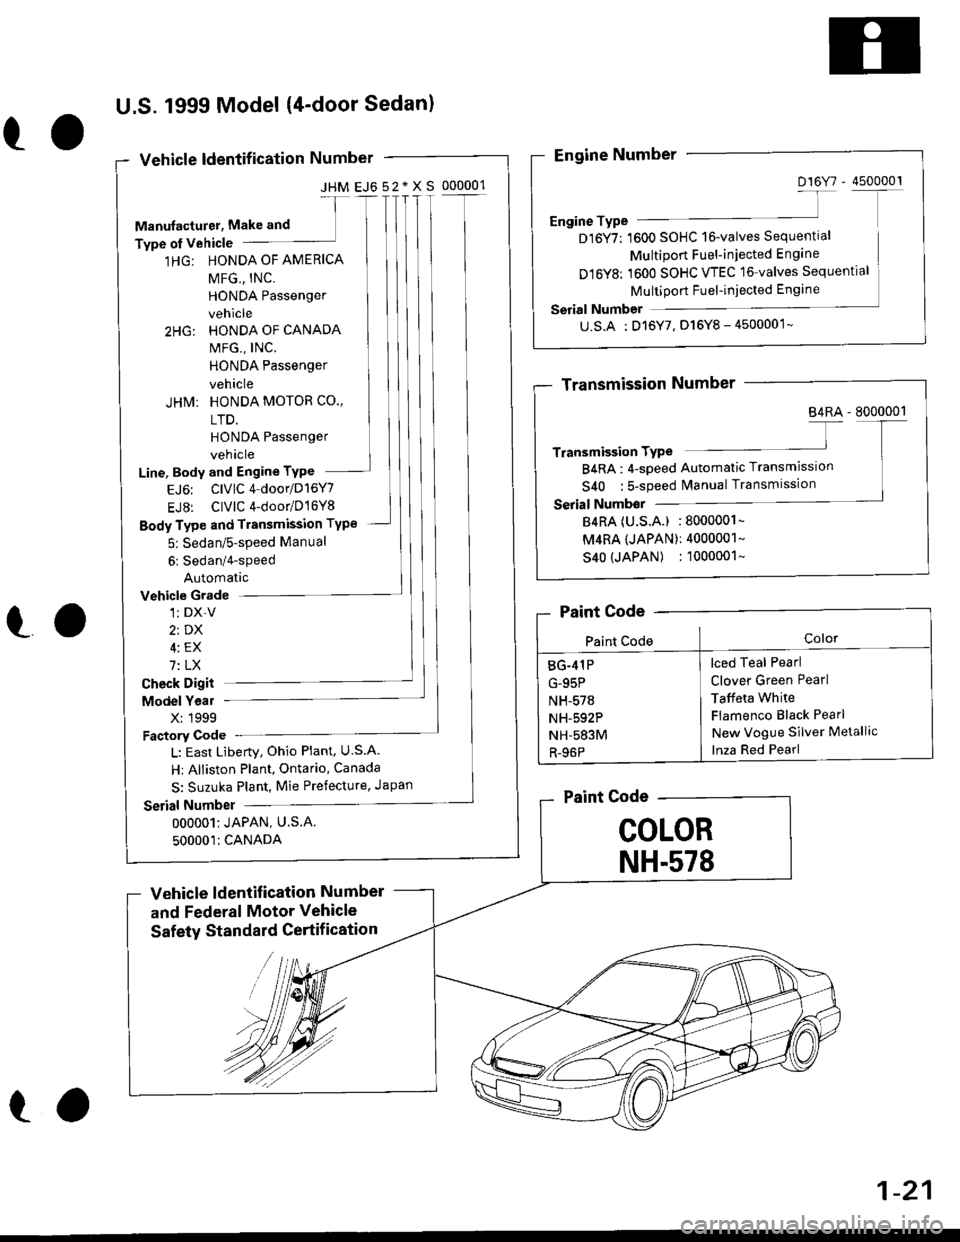 HONDA CIVIC 2000 6.G Owners Manual ro
U.S. 1999 Model (4door Sedan)
Vehicle ldentif ication Number
JHM EJ652*XS 000001-f
Manufacturel, Make and
Type ol vehicle
1HG: HONDA OF AMERICA
Vehicle Gradel: DX-V
2t DX
4: EX
7: LX
HONDA Passen